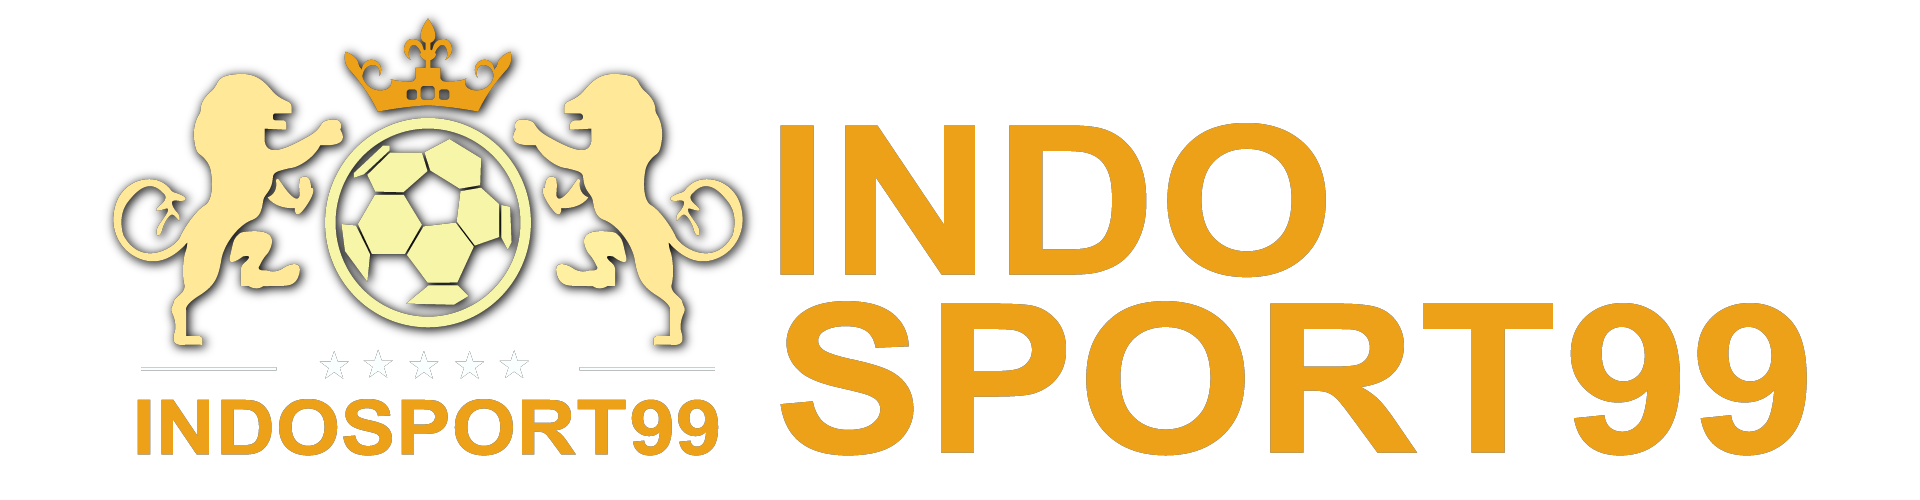 logo indosport99